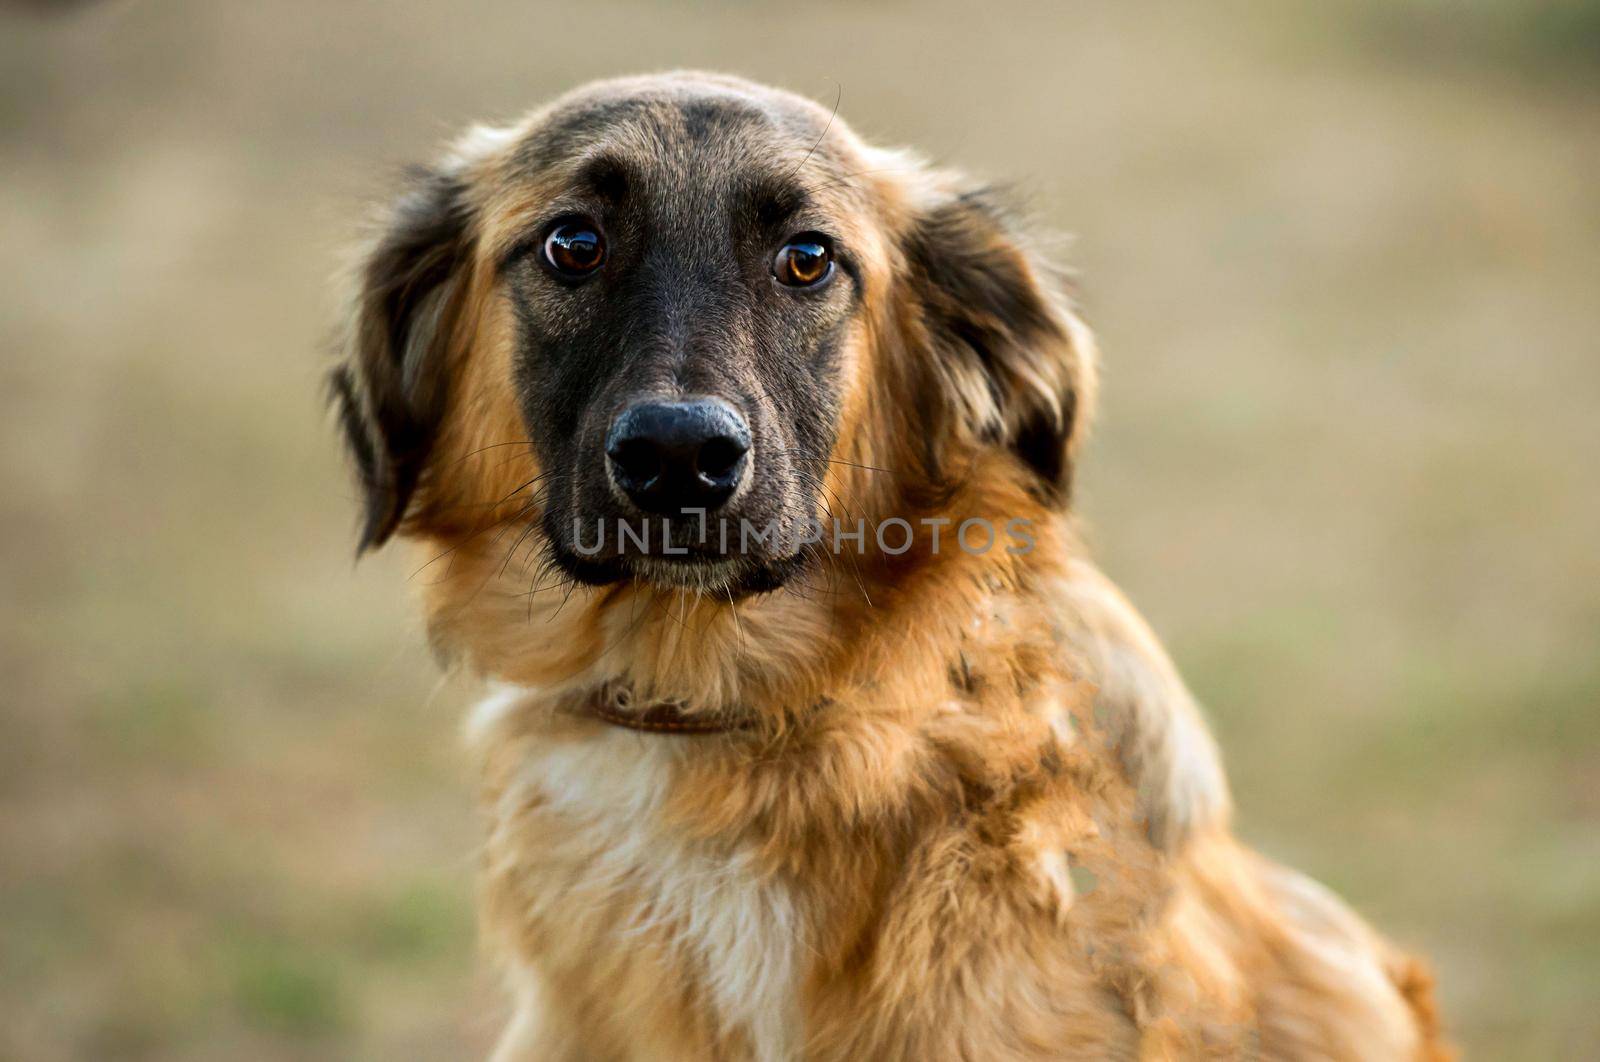 portrait of a mongrel dog close-up